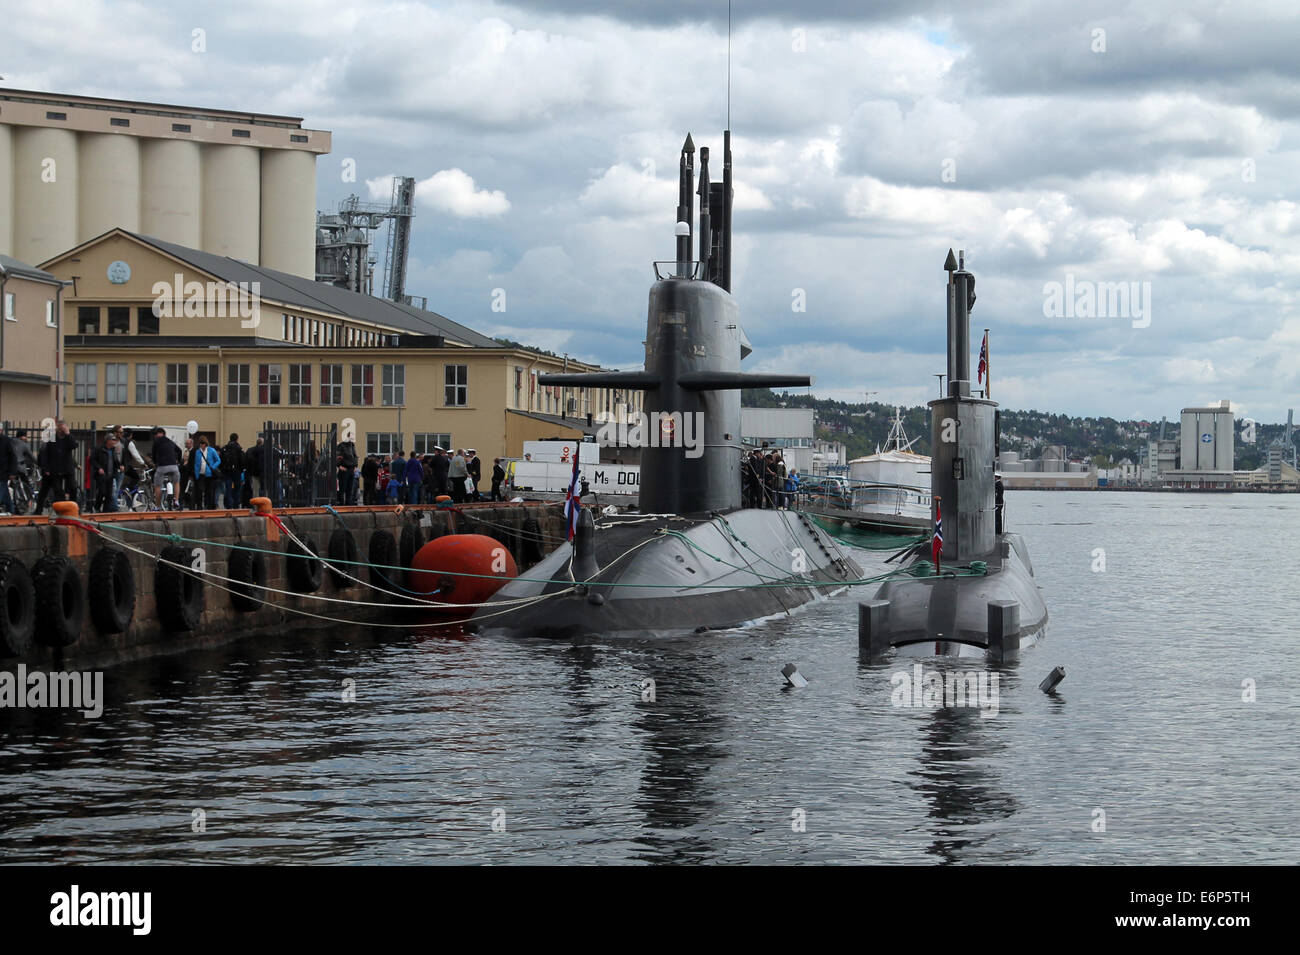 Dutch Walrus and Norwegian Ula class submarines. May 2014, Oslo, Norway during Royal Norwegian Navy's 200th anniversary celebrations. Stock Photo